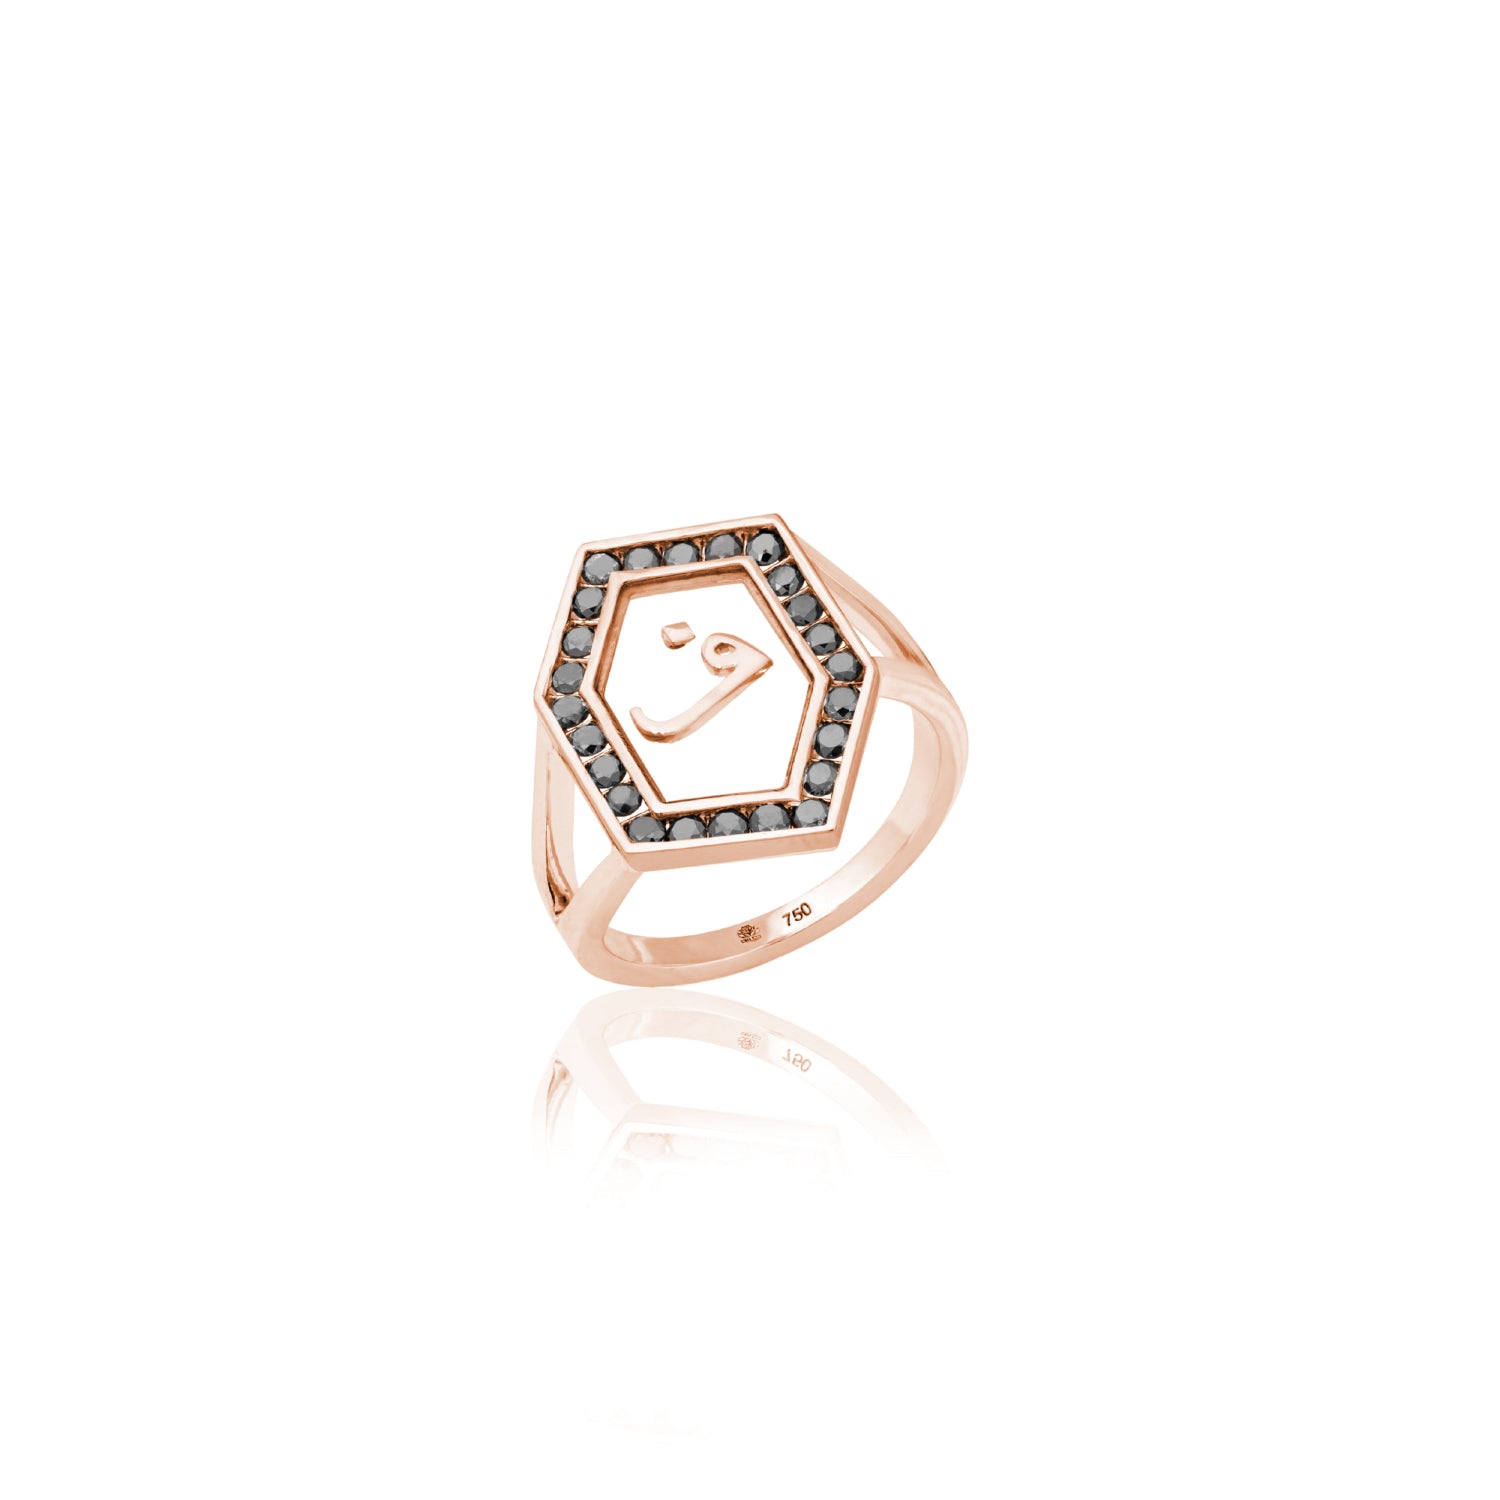 Qamoos 1.0 Letter ف Black Diamond Ring in Rose Gold